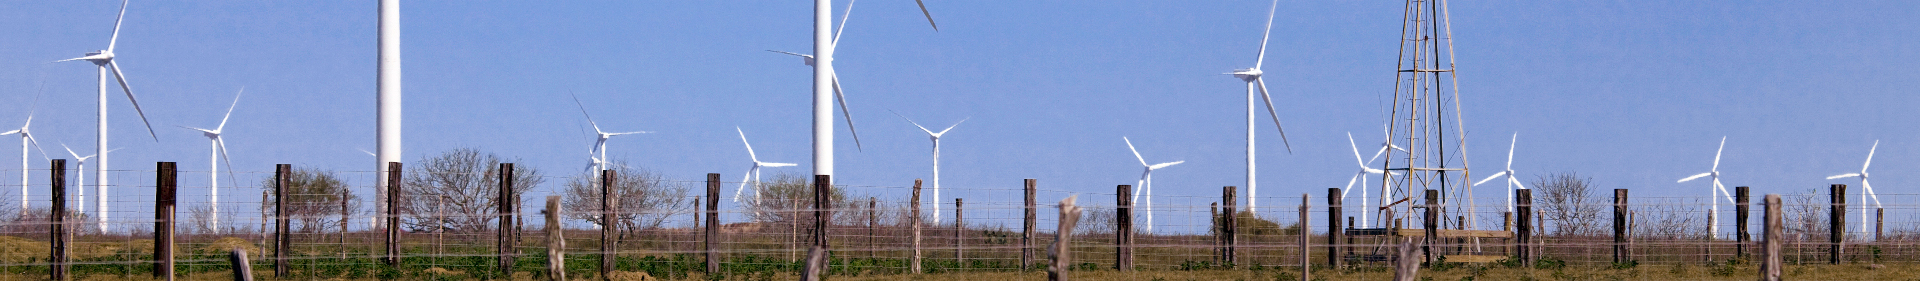 Penascal Wind Farm